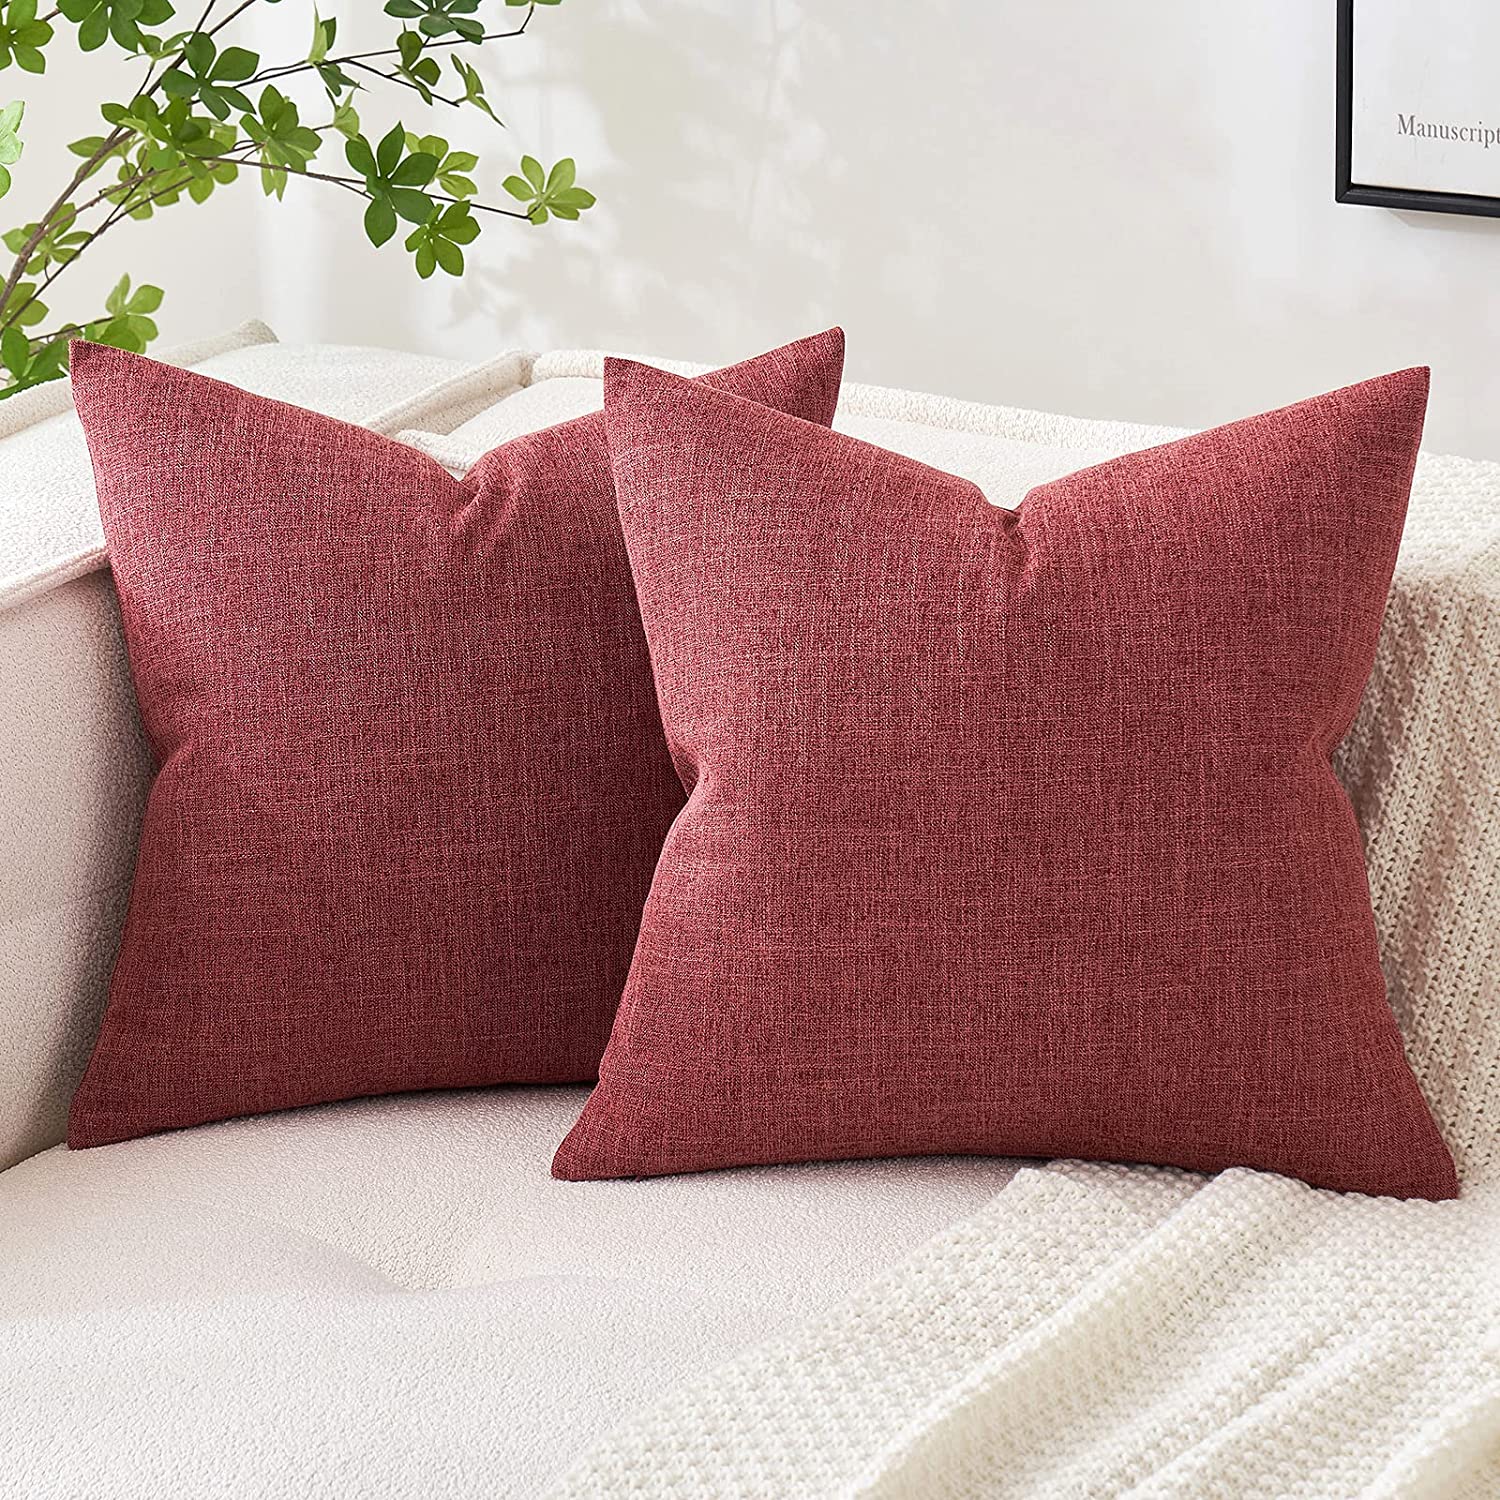  MIULEE Pack of 2 Decorative Burlap Linen Throw Pillow